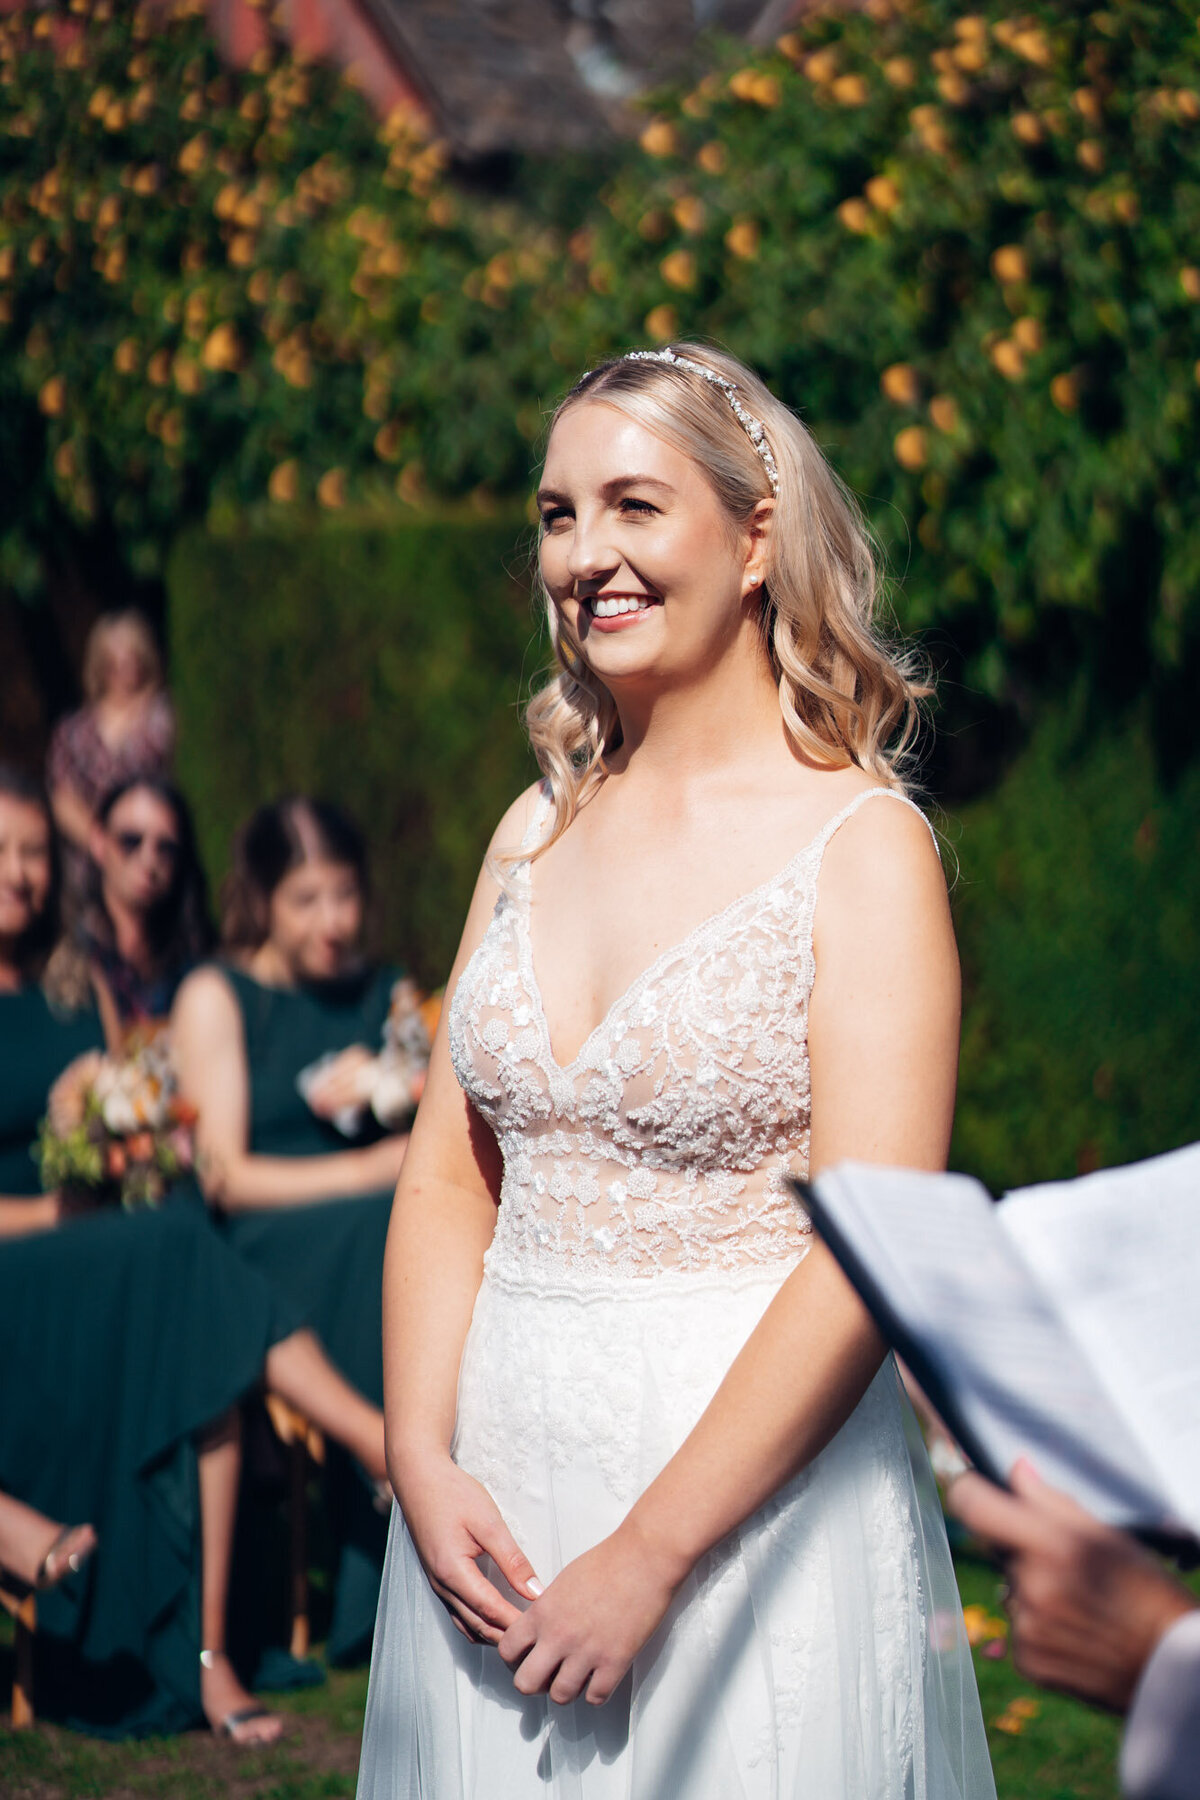 Pauntley-court-wedding-photographer-bride-during-outdoor-ceremony